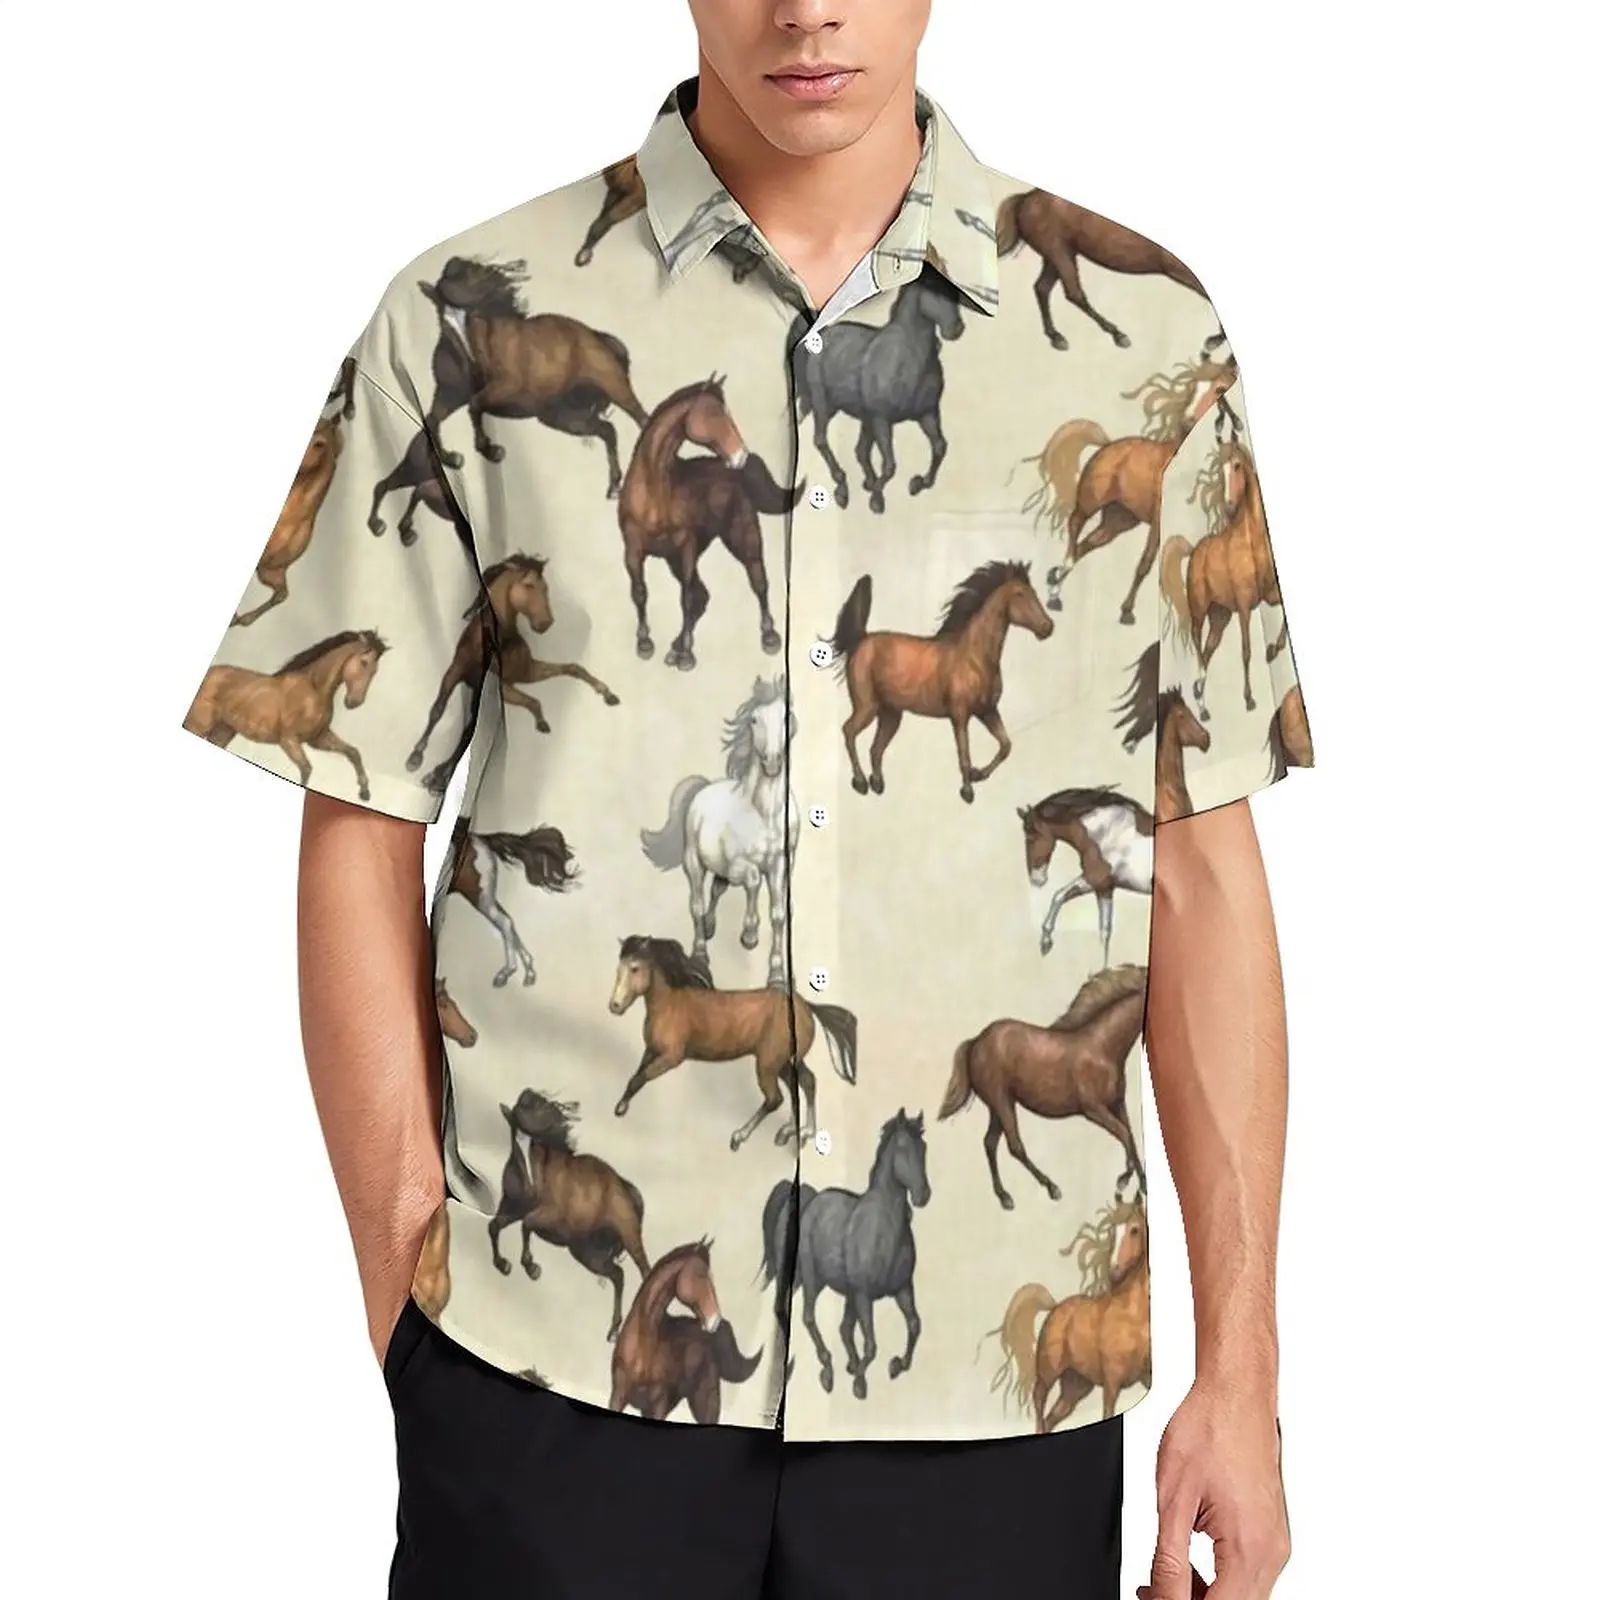 

Sunset Horse Beach Shirt Cool Animal Print Hawaiian Casual Shirts Male Stylish Blouses Short Sleeves Printed Clothes 3XL 4XL